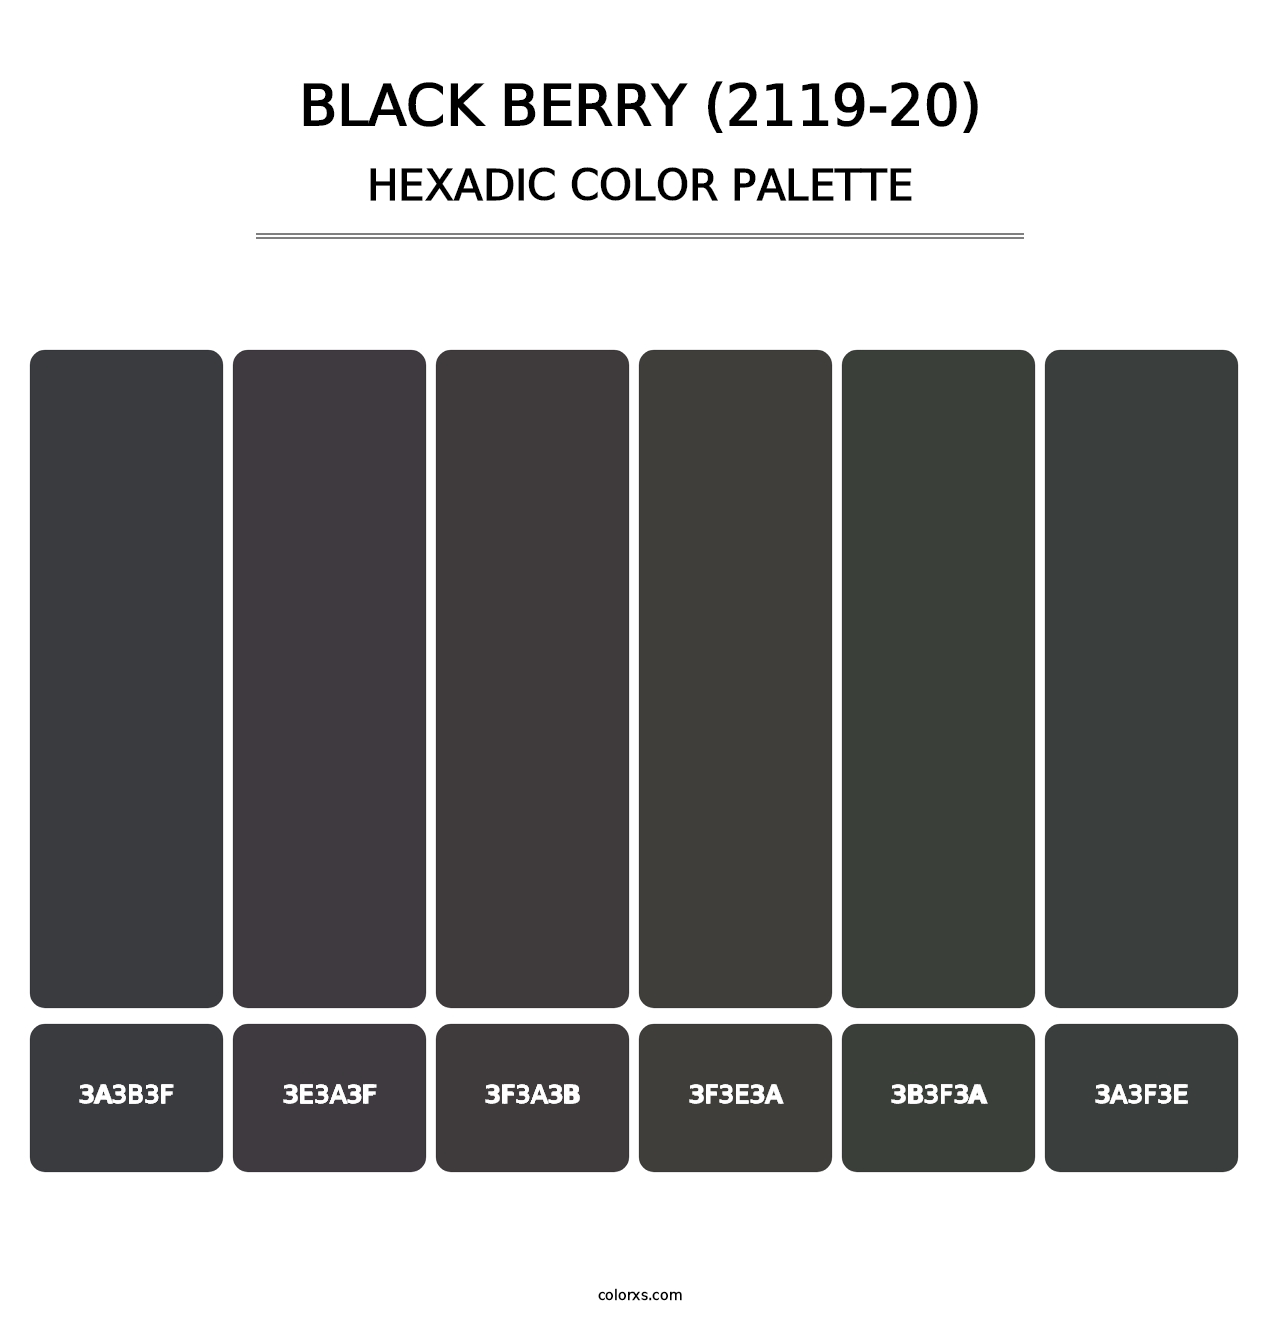 Black Berry (2119-20) - Hexadic Color Palette